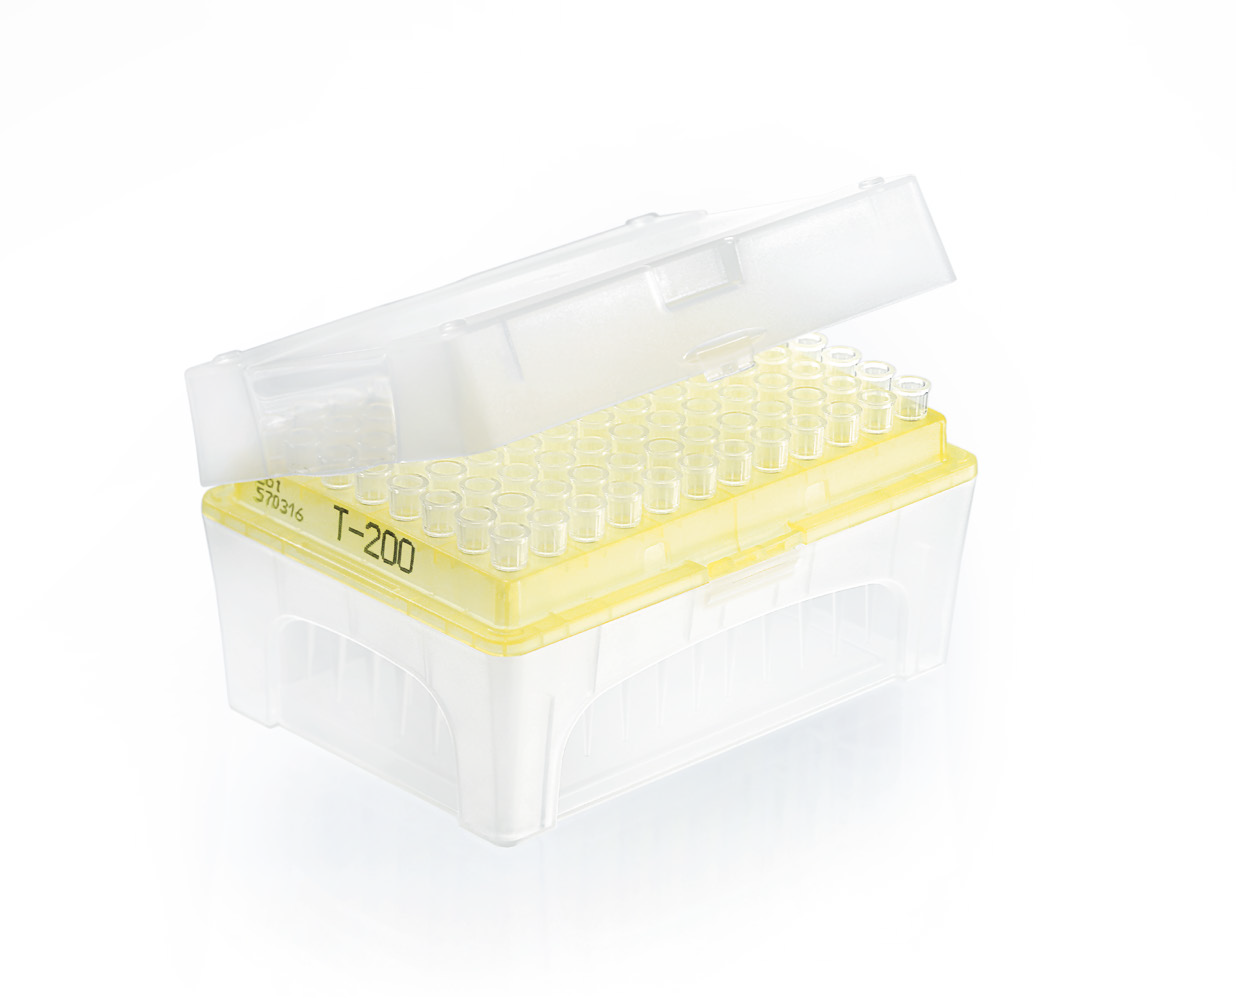 Filter tips rack DNA-/RNase-free IVD TipBox  2 - 20 μl, PCK=480